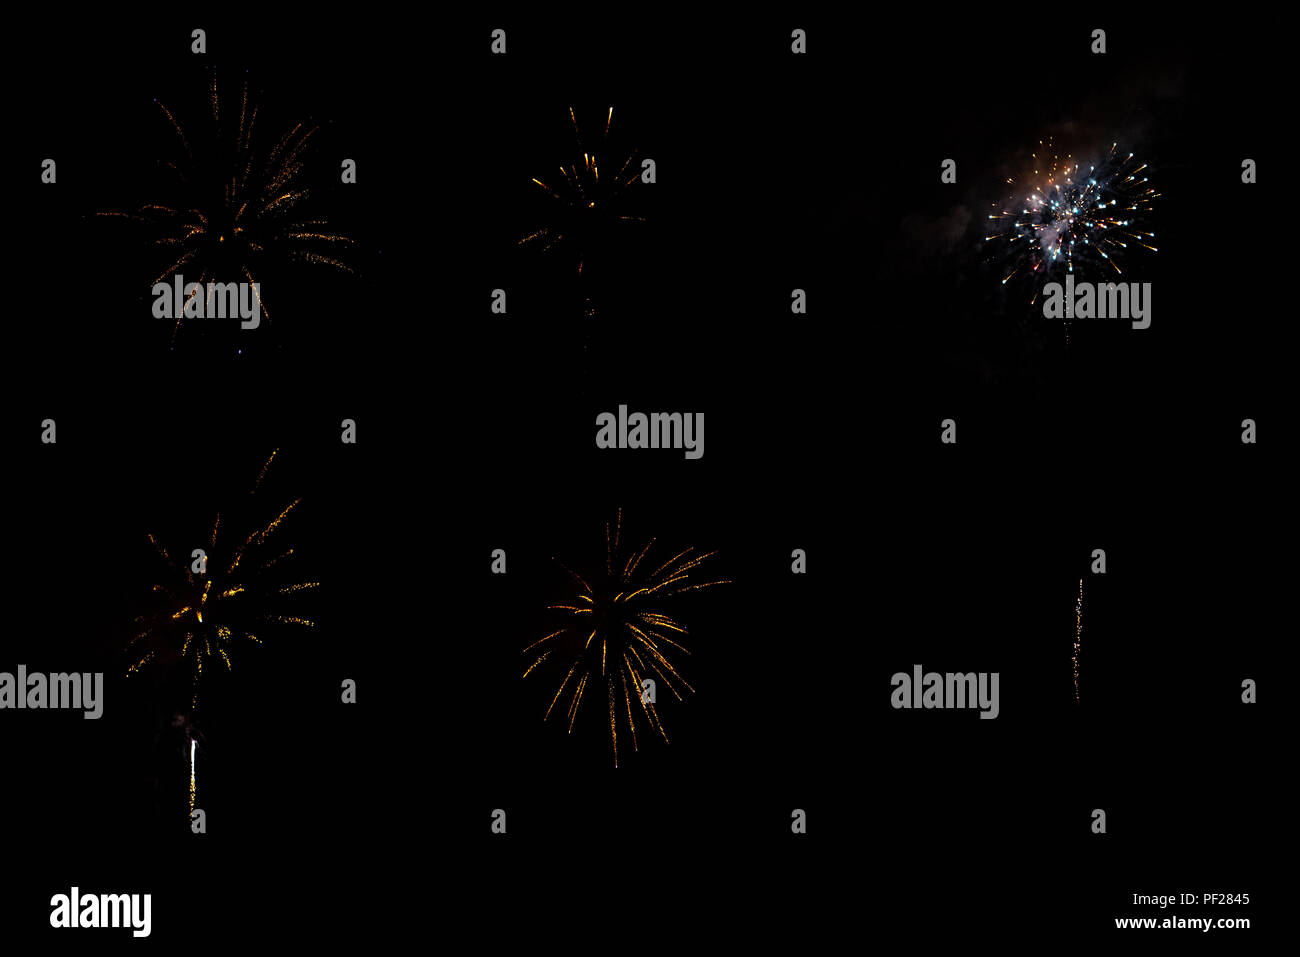 Fireworks on black background, element for design work, for overlay on image Stock Photo